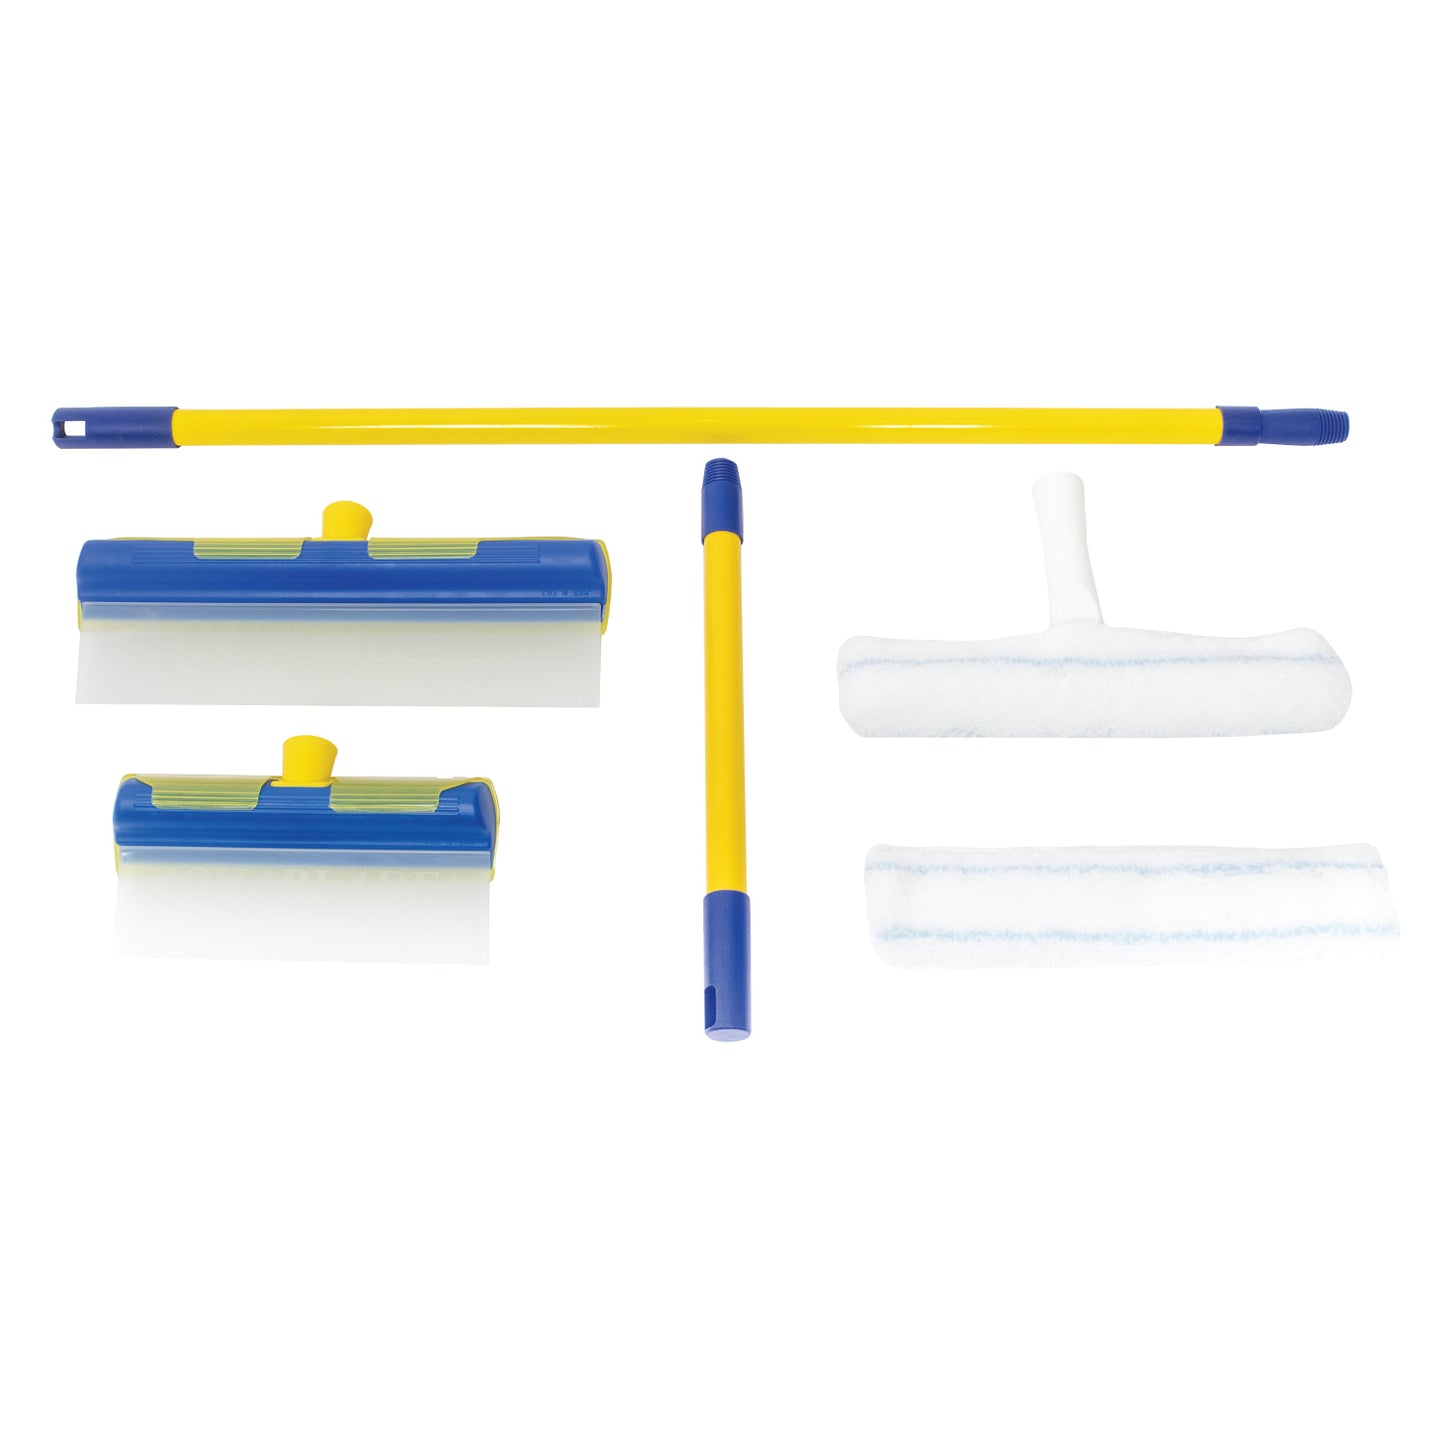 AquaBLADE Cleaner Kit